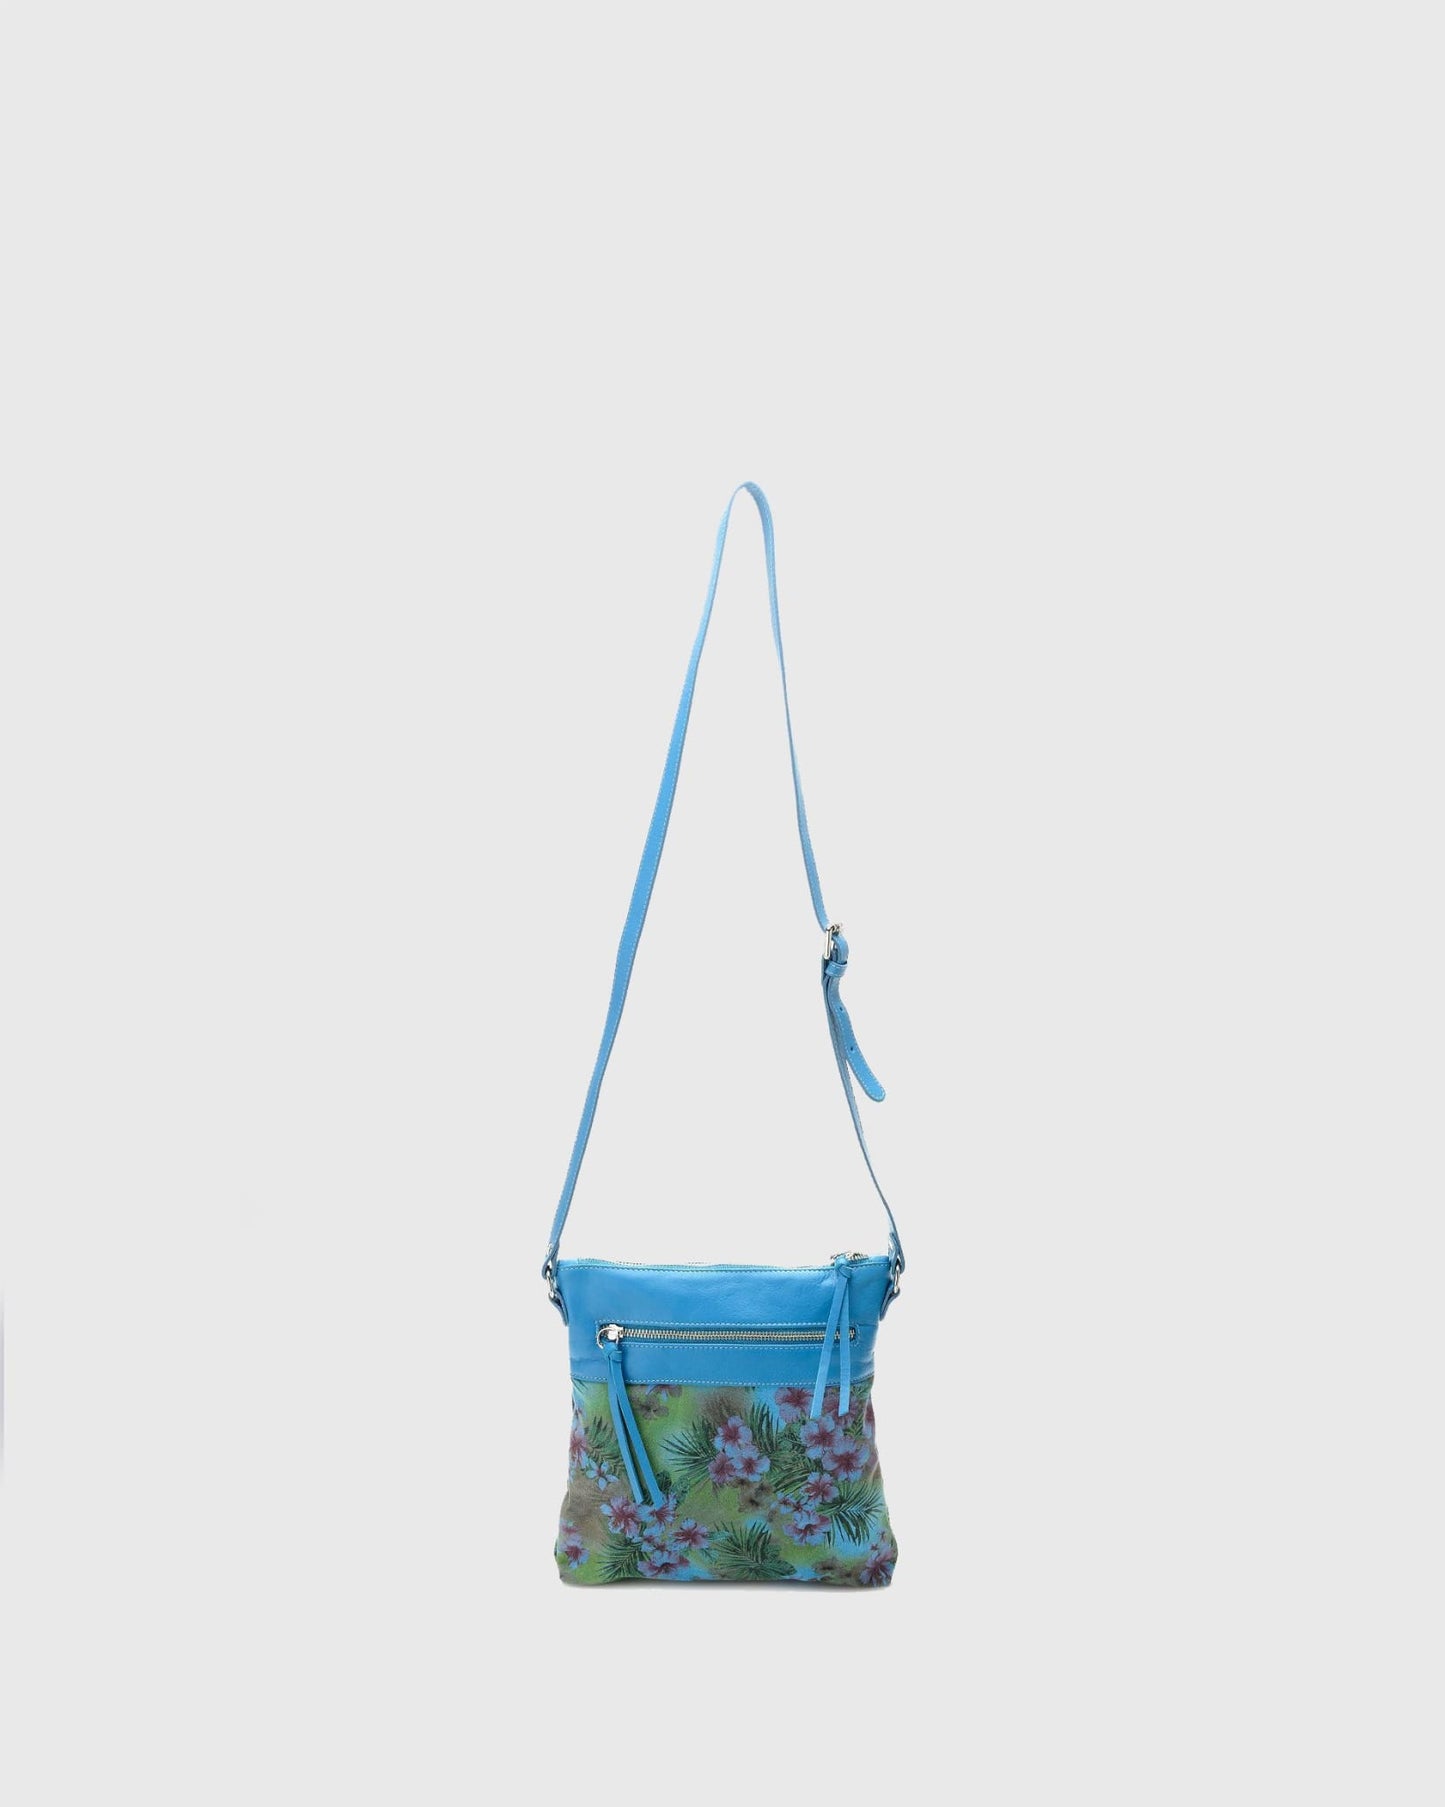 Lia - Blue Bags | Pietro NYC